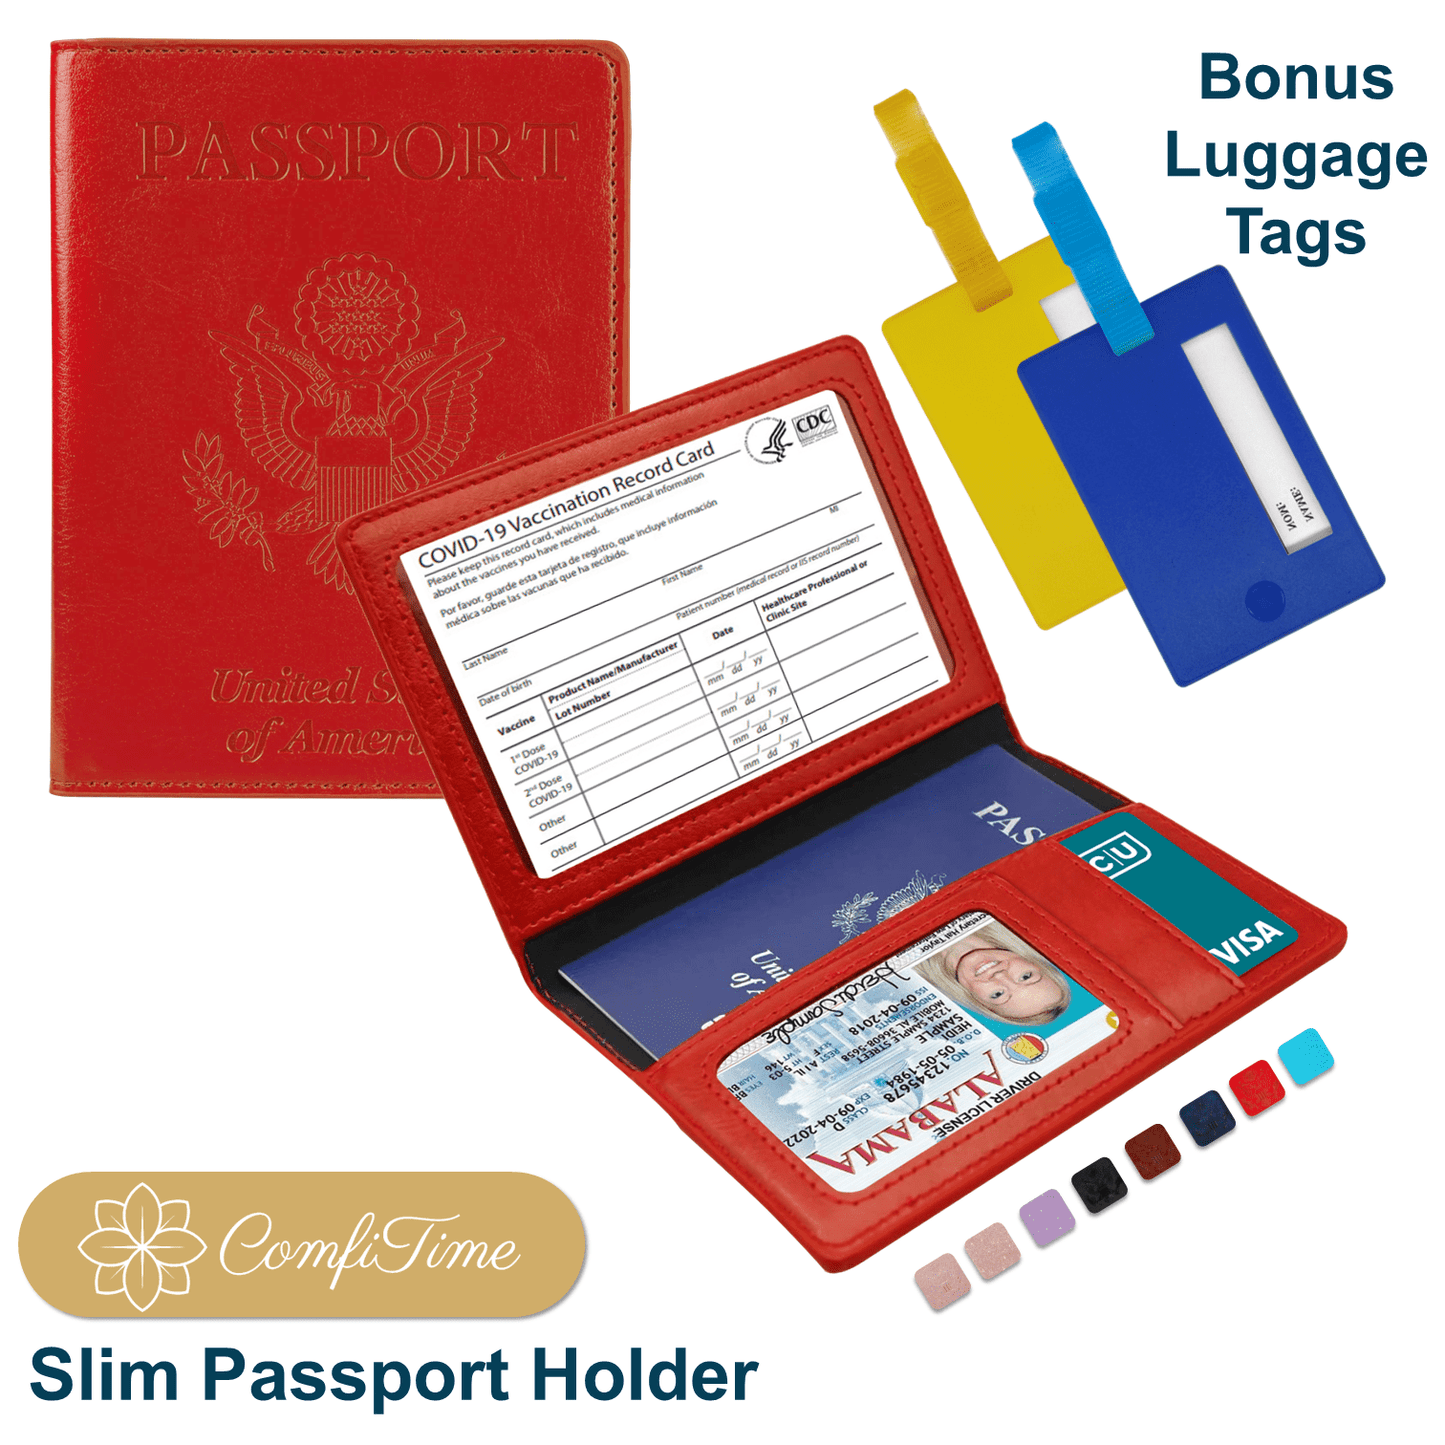 Slim Passport Holder With Two Bonus Luggage Tags